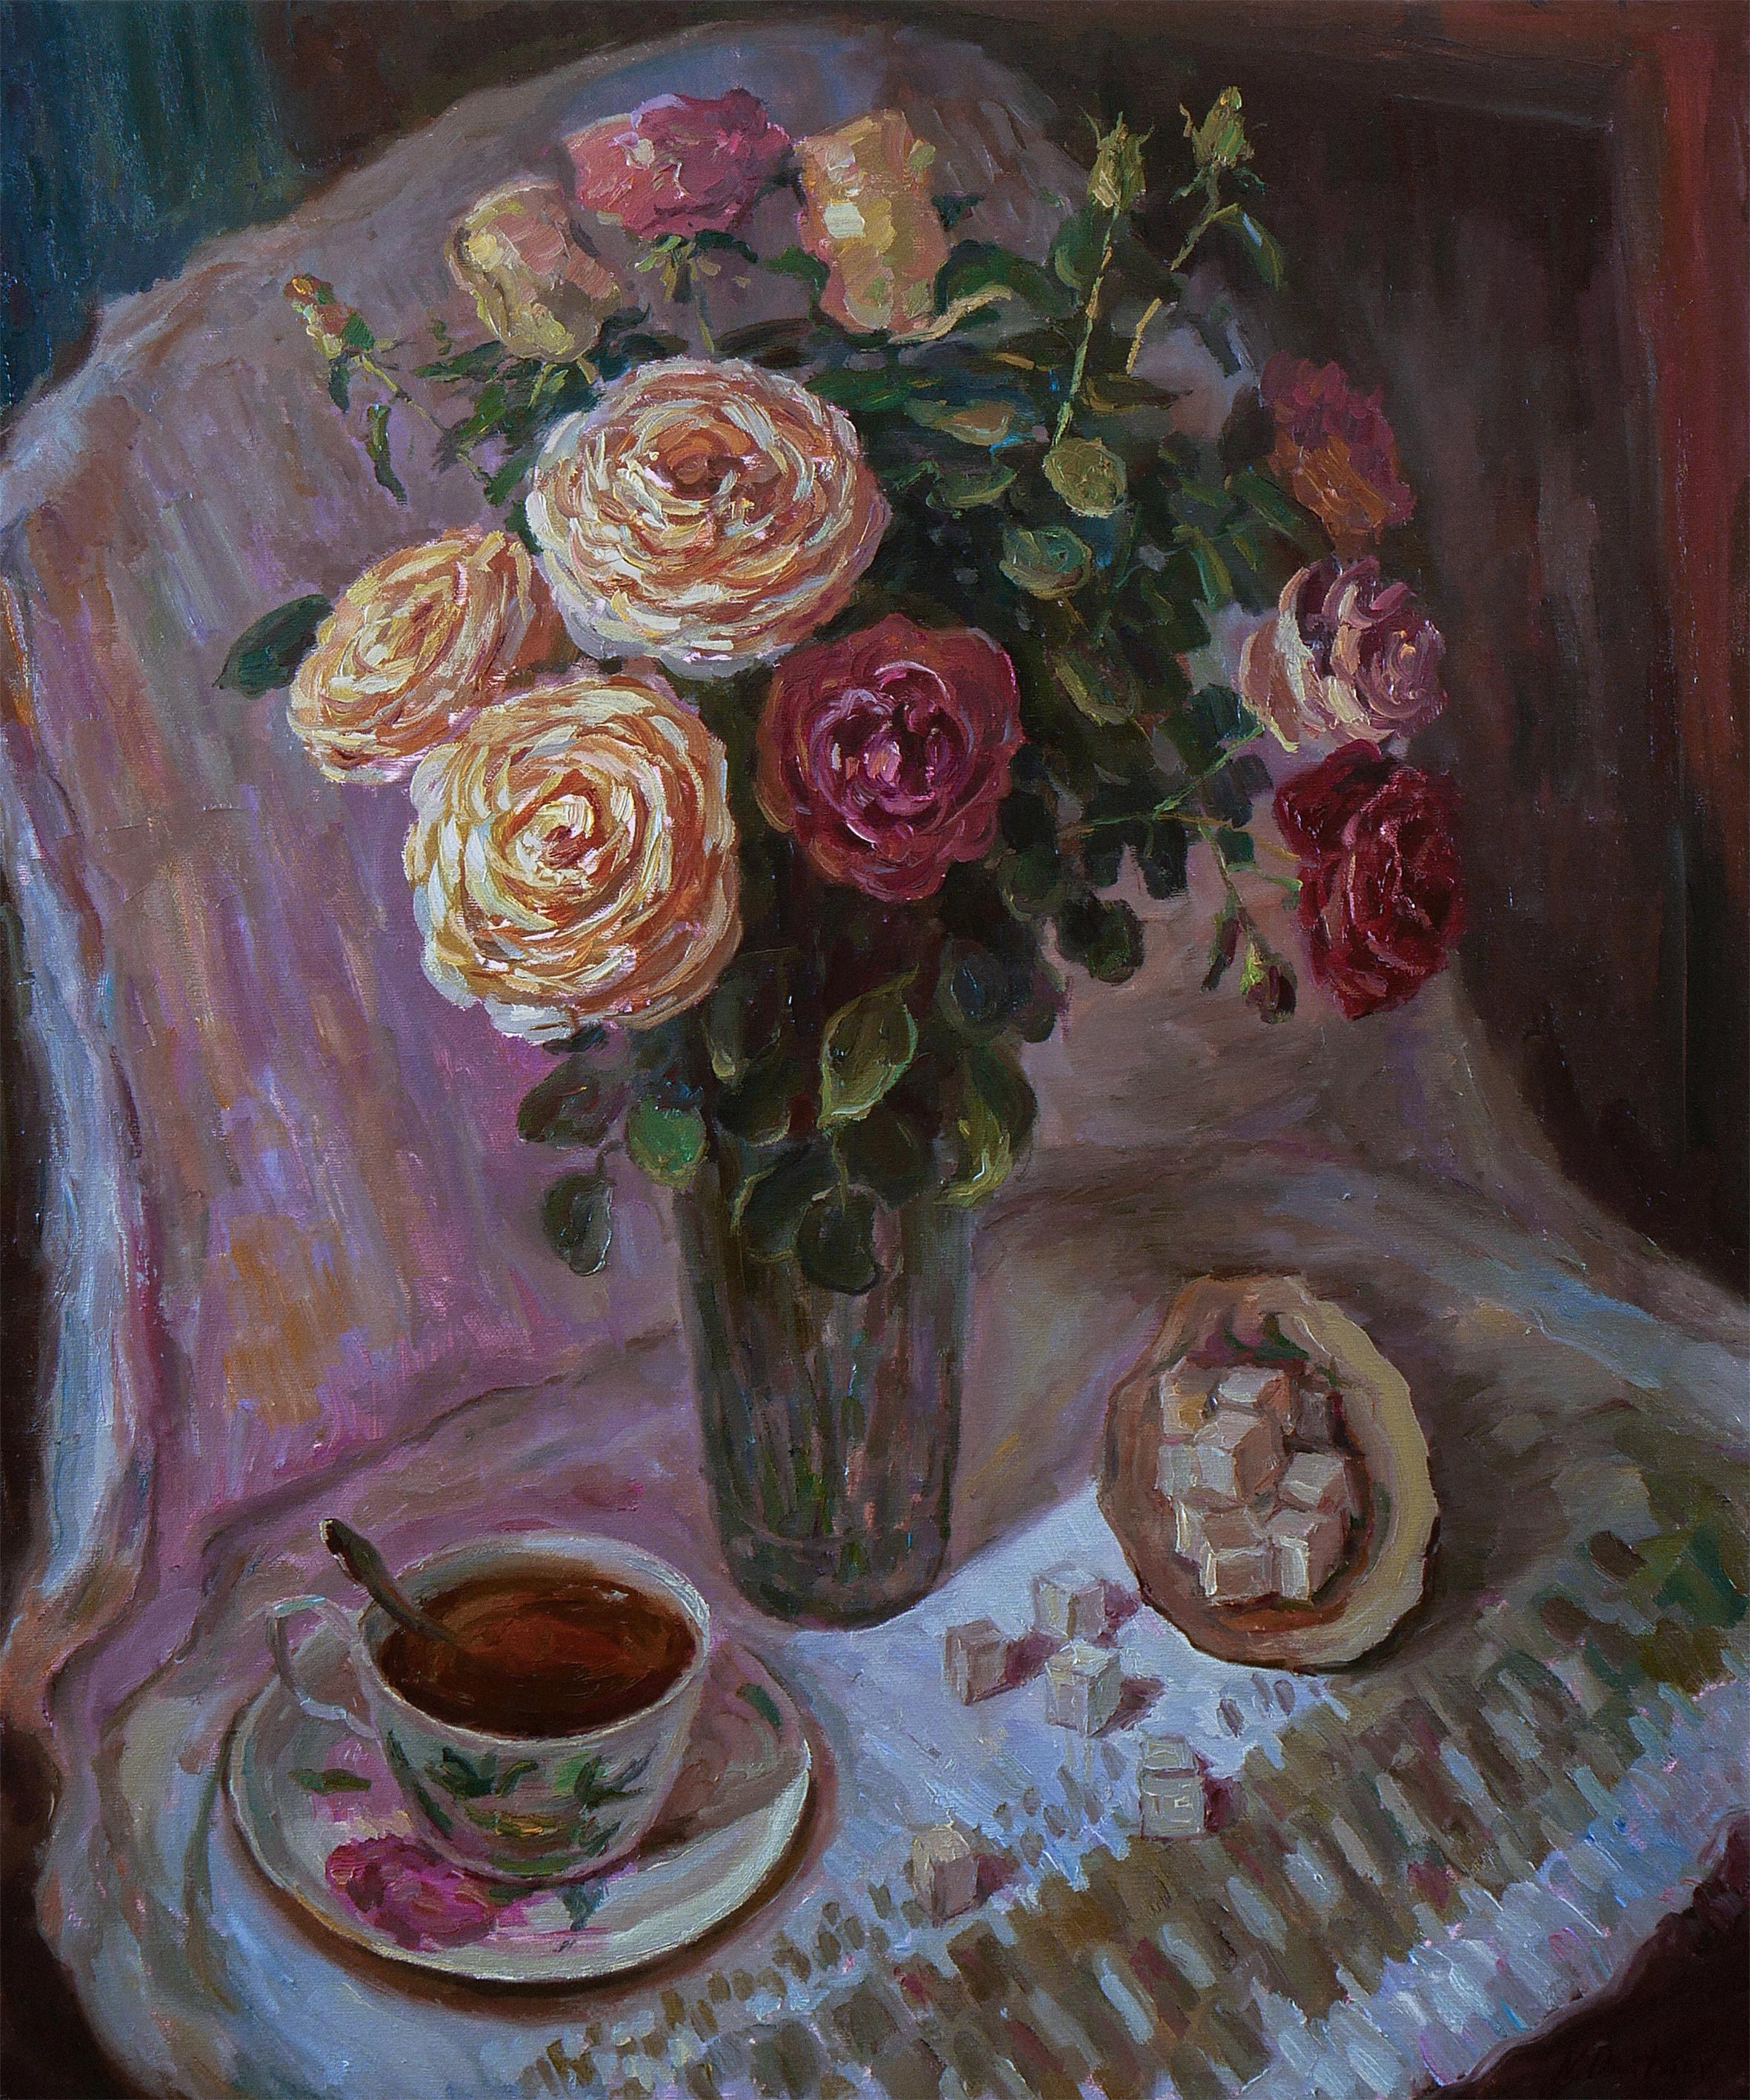 Nikolay Dmitriev Interior Painting - Morning Bouquet Of Roses - floral still life painting